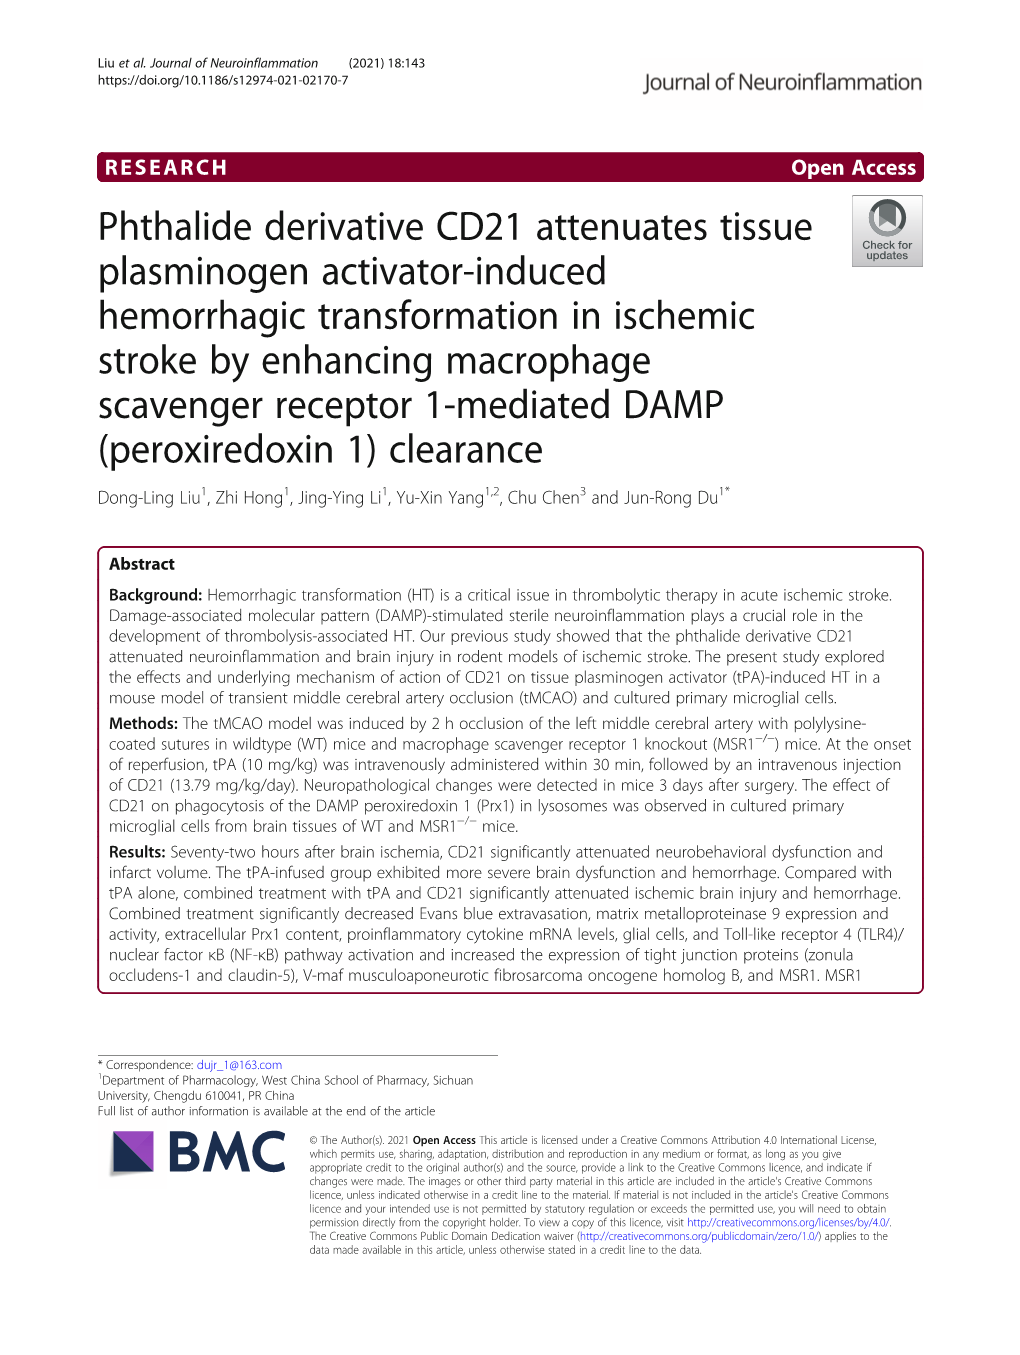 Phthalide Derivative CD21 Attenuates Tissue Plasminogen Activator